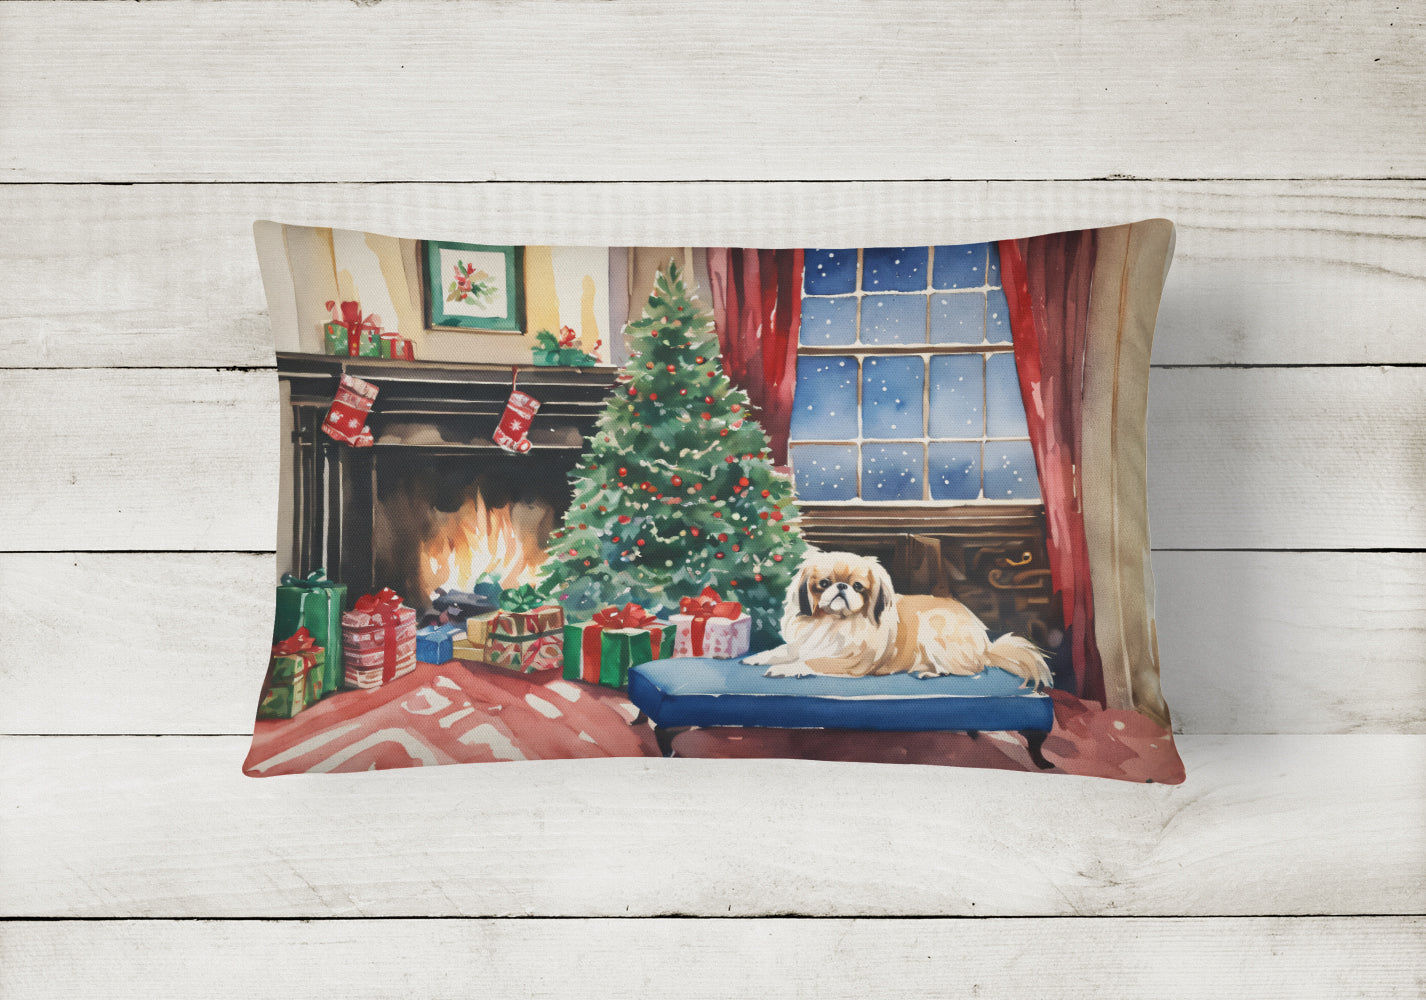 Buy this Pekingese Cozy Christmas Throw Pillow